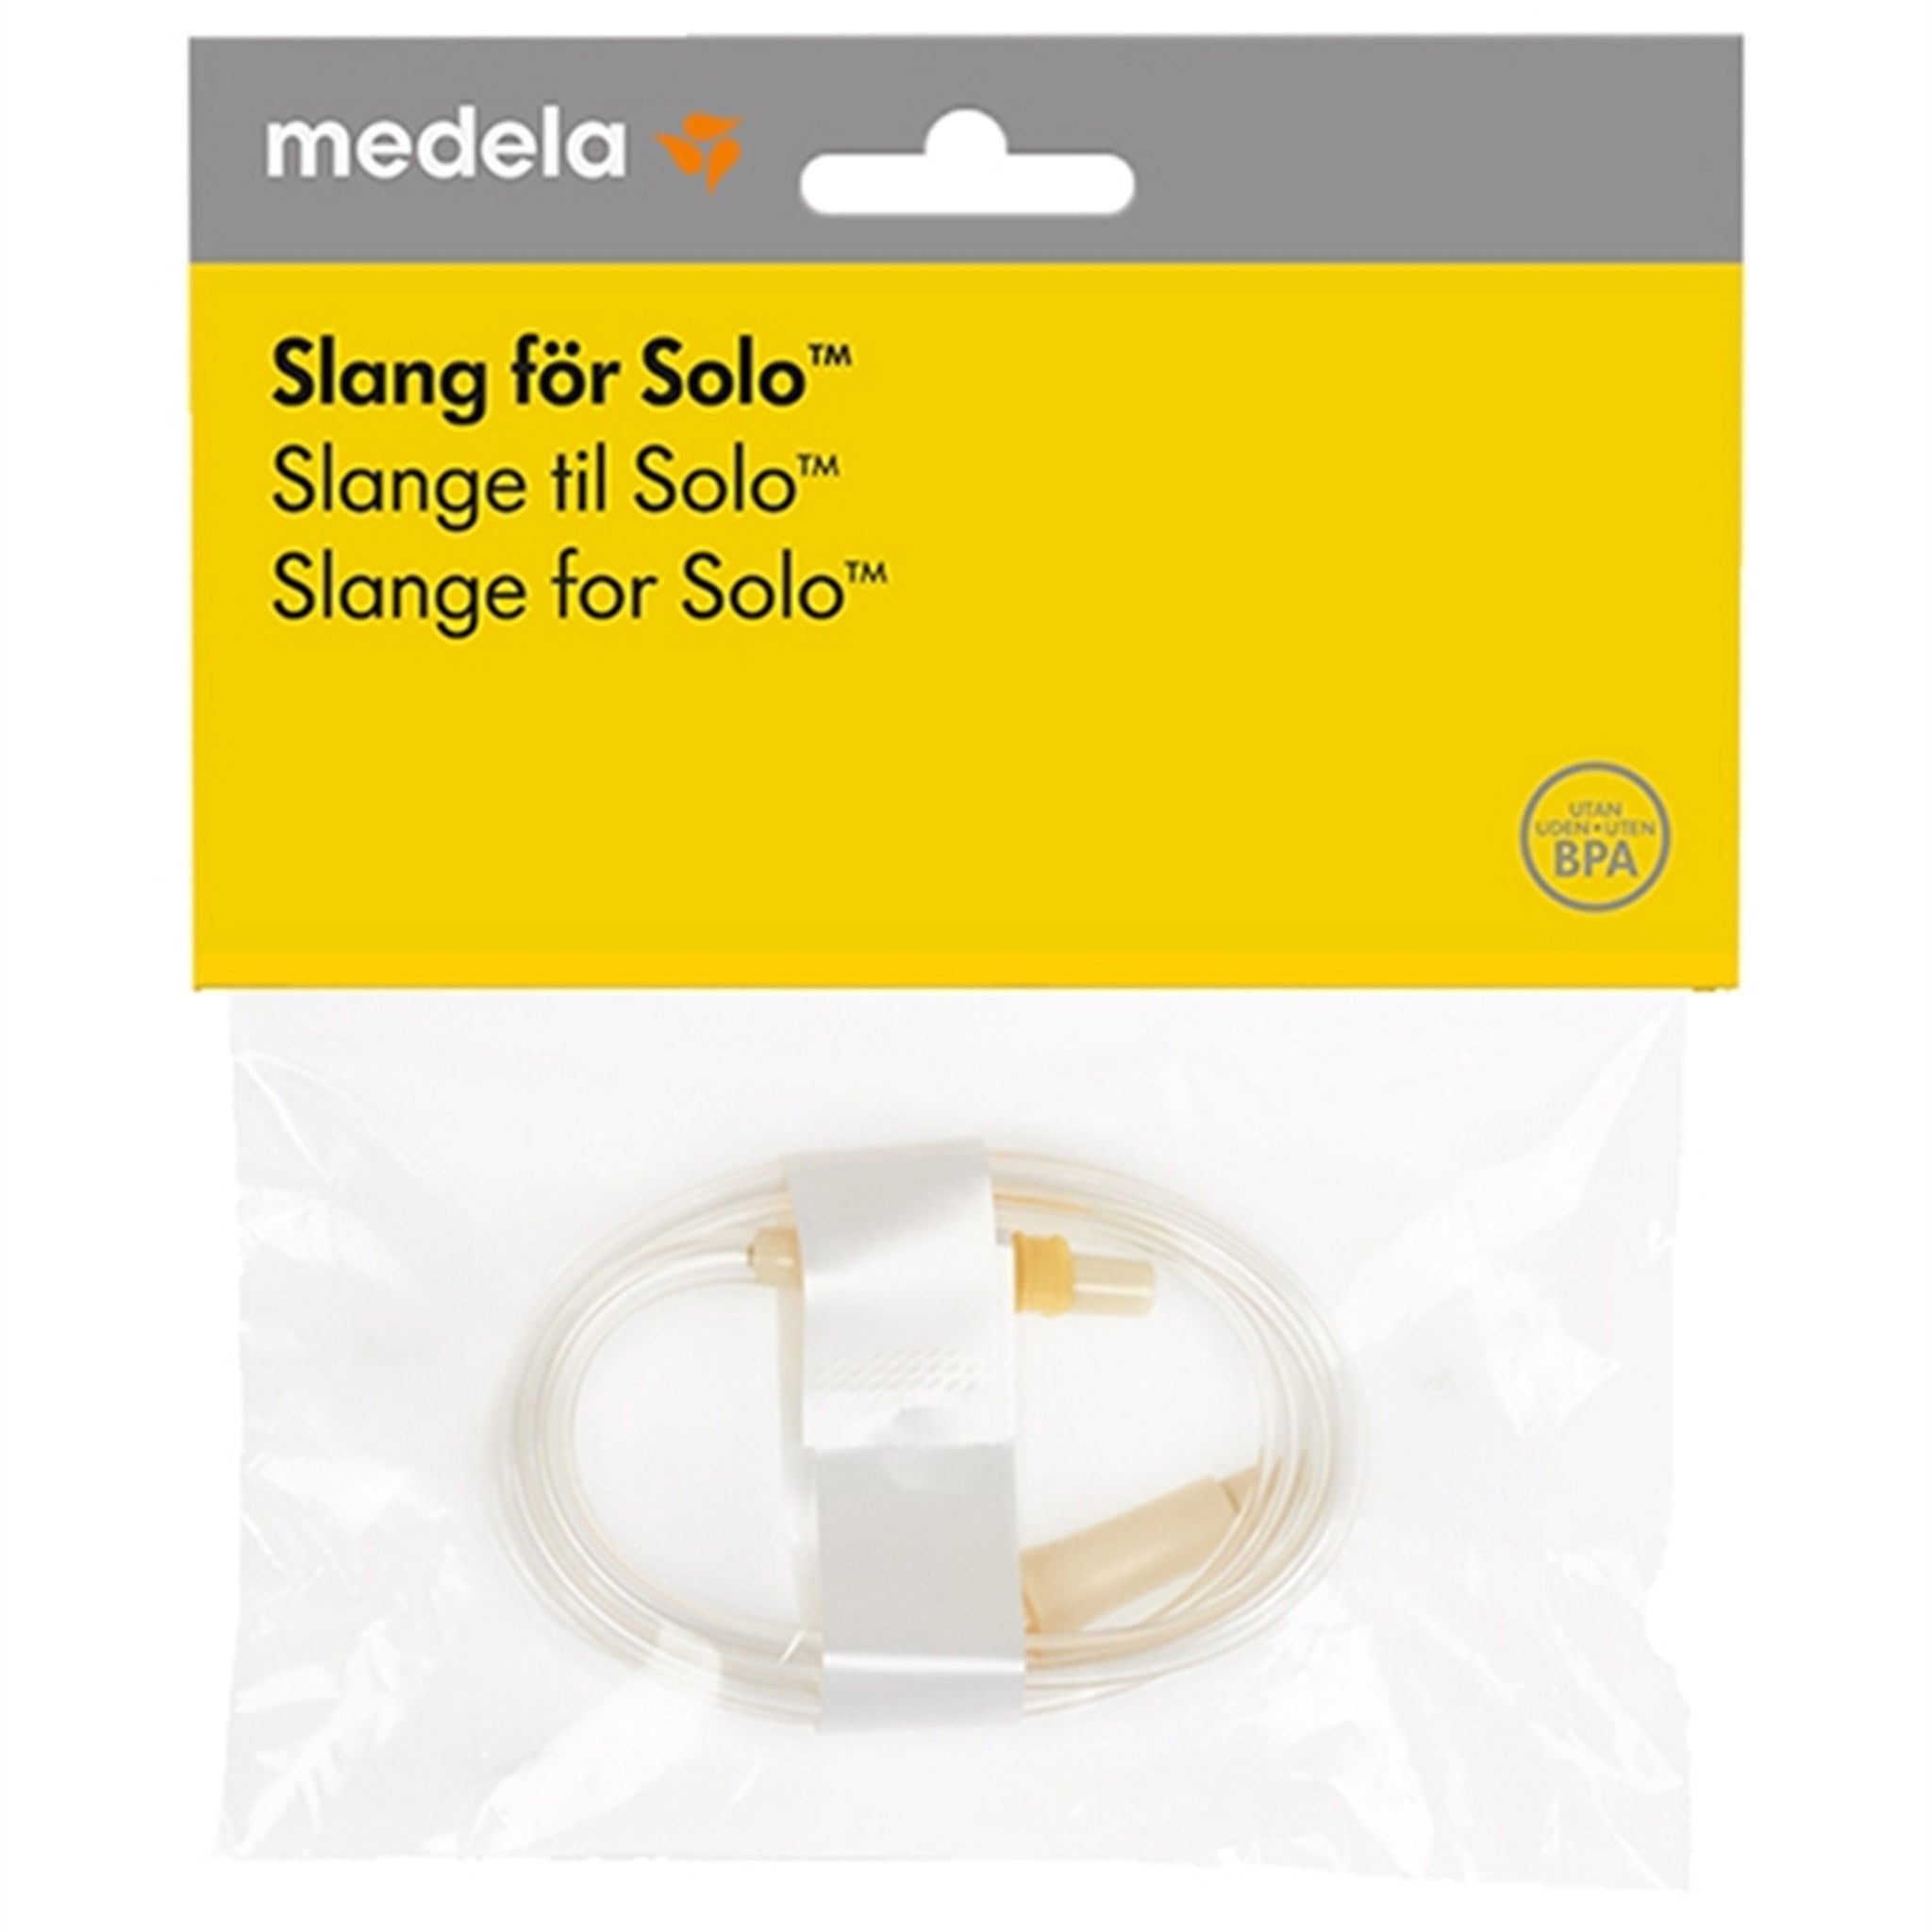 medela Hose for Solo / Swing Flex Breast Pump 2